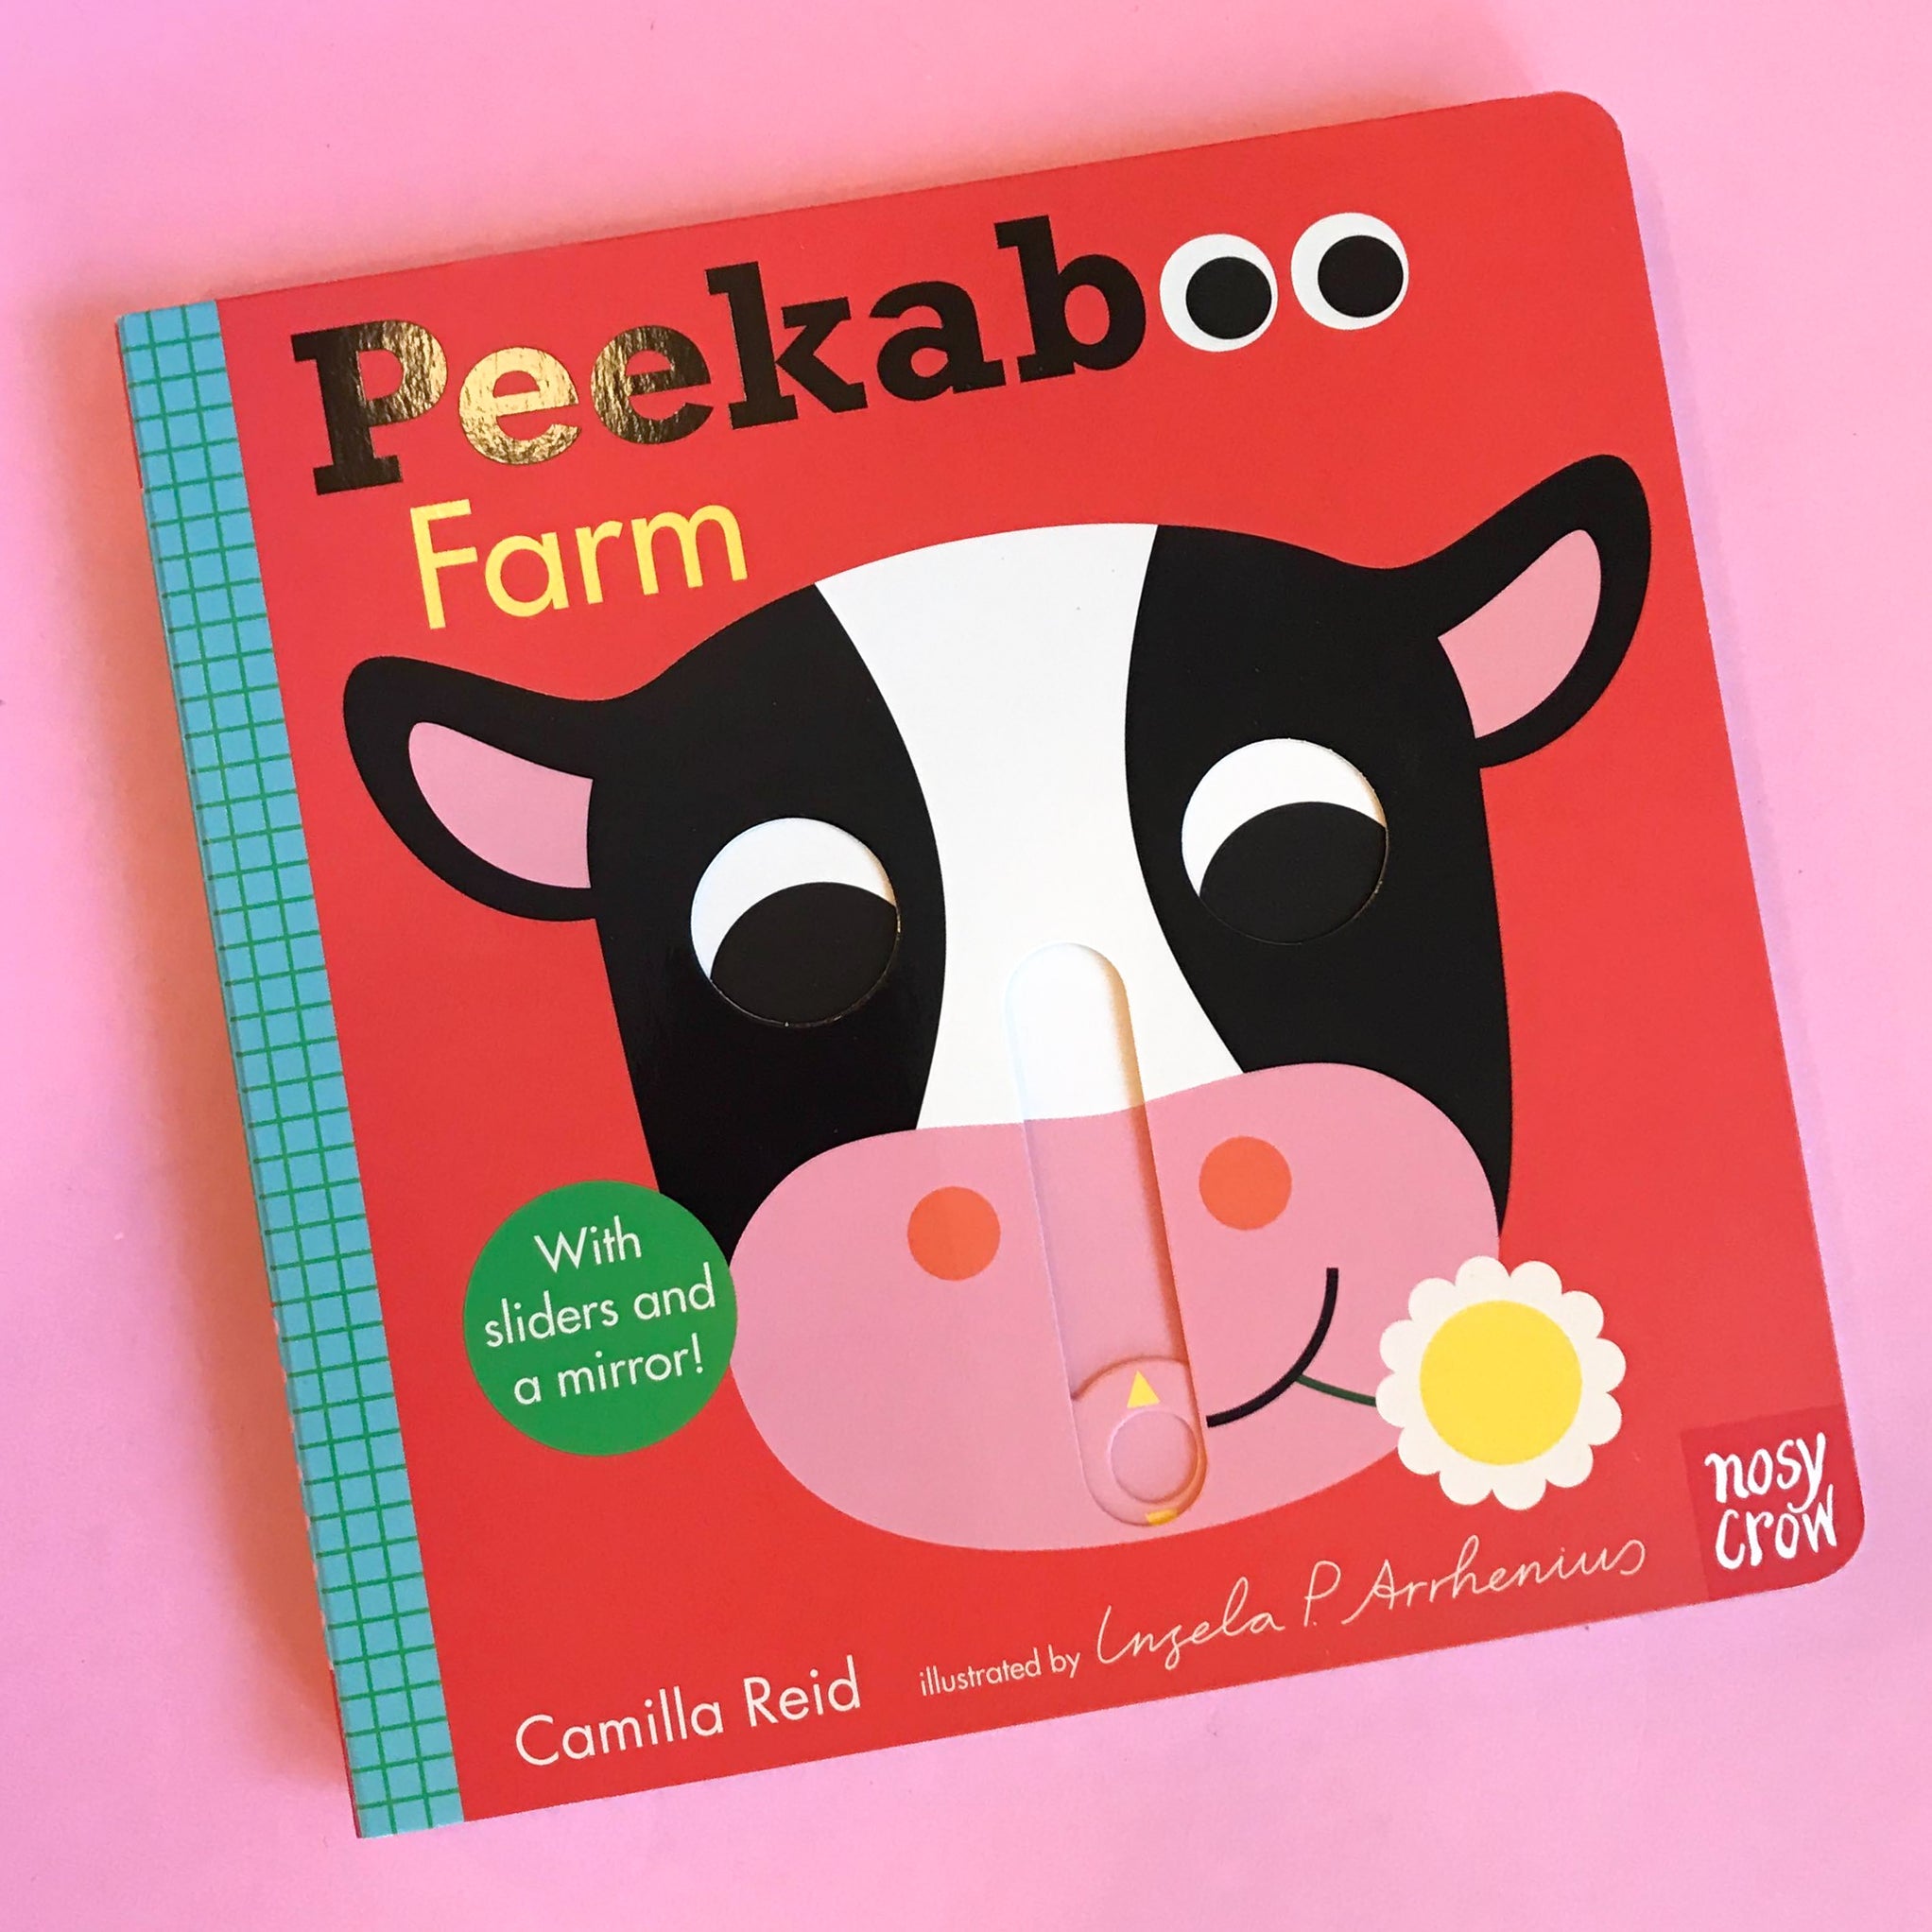 Peekaboo: Farm by Camilla Reid and Ingela P Arrhenius – Collage Collage